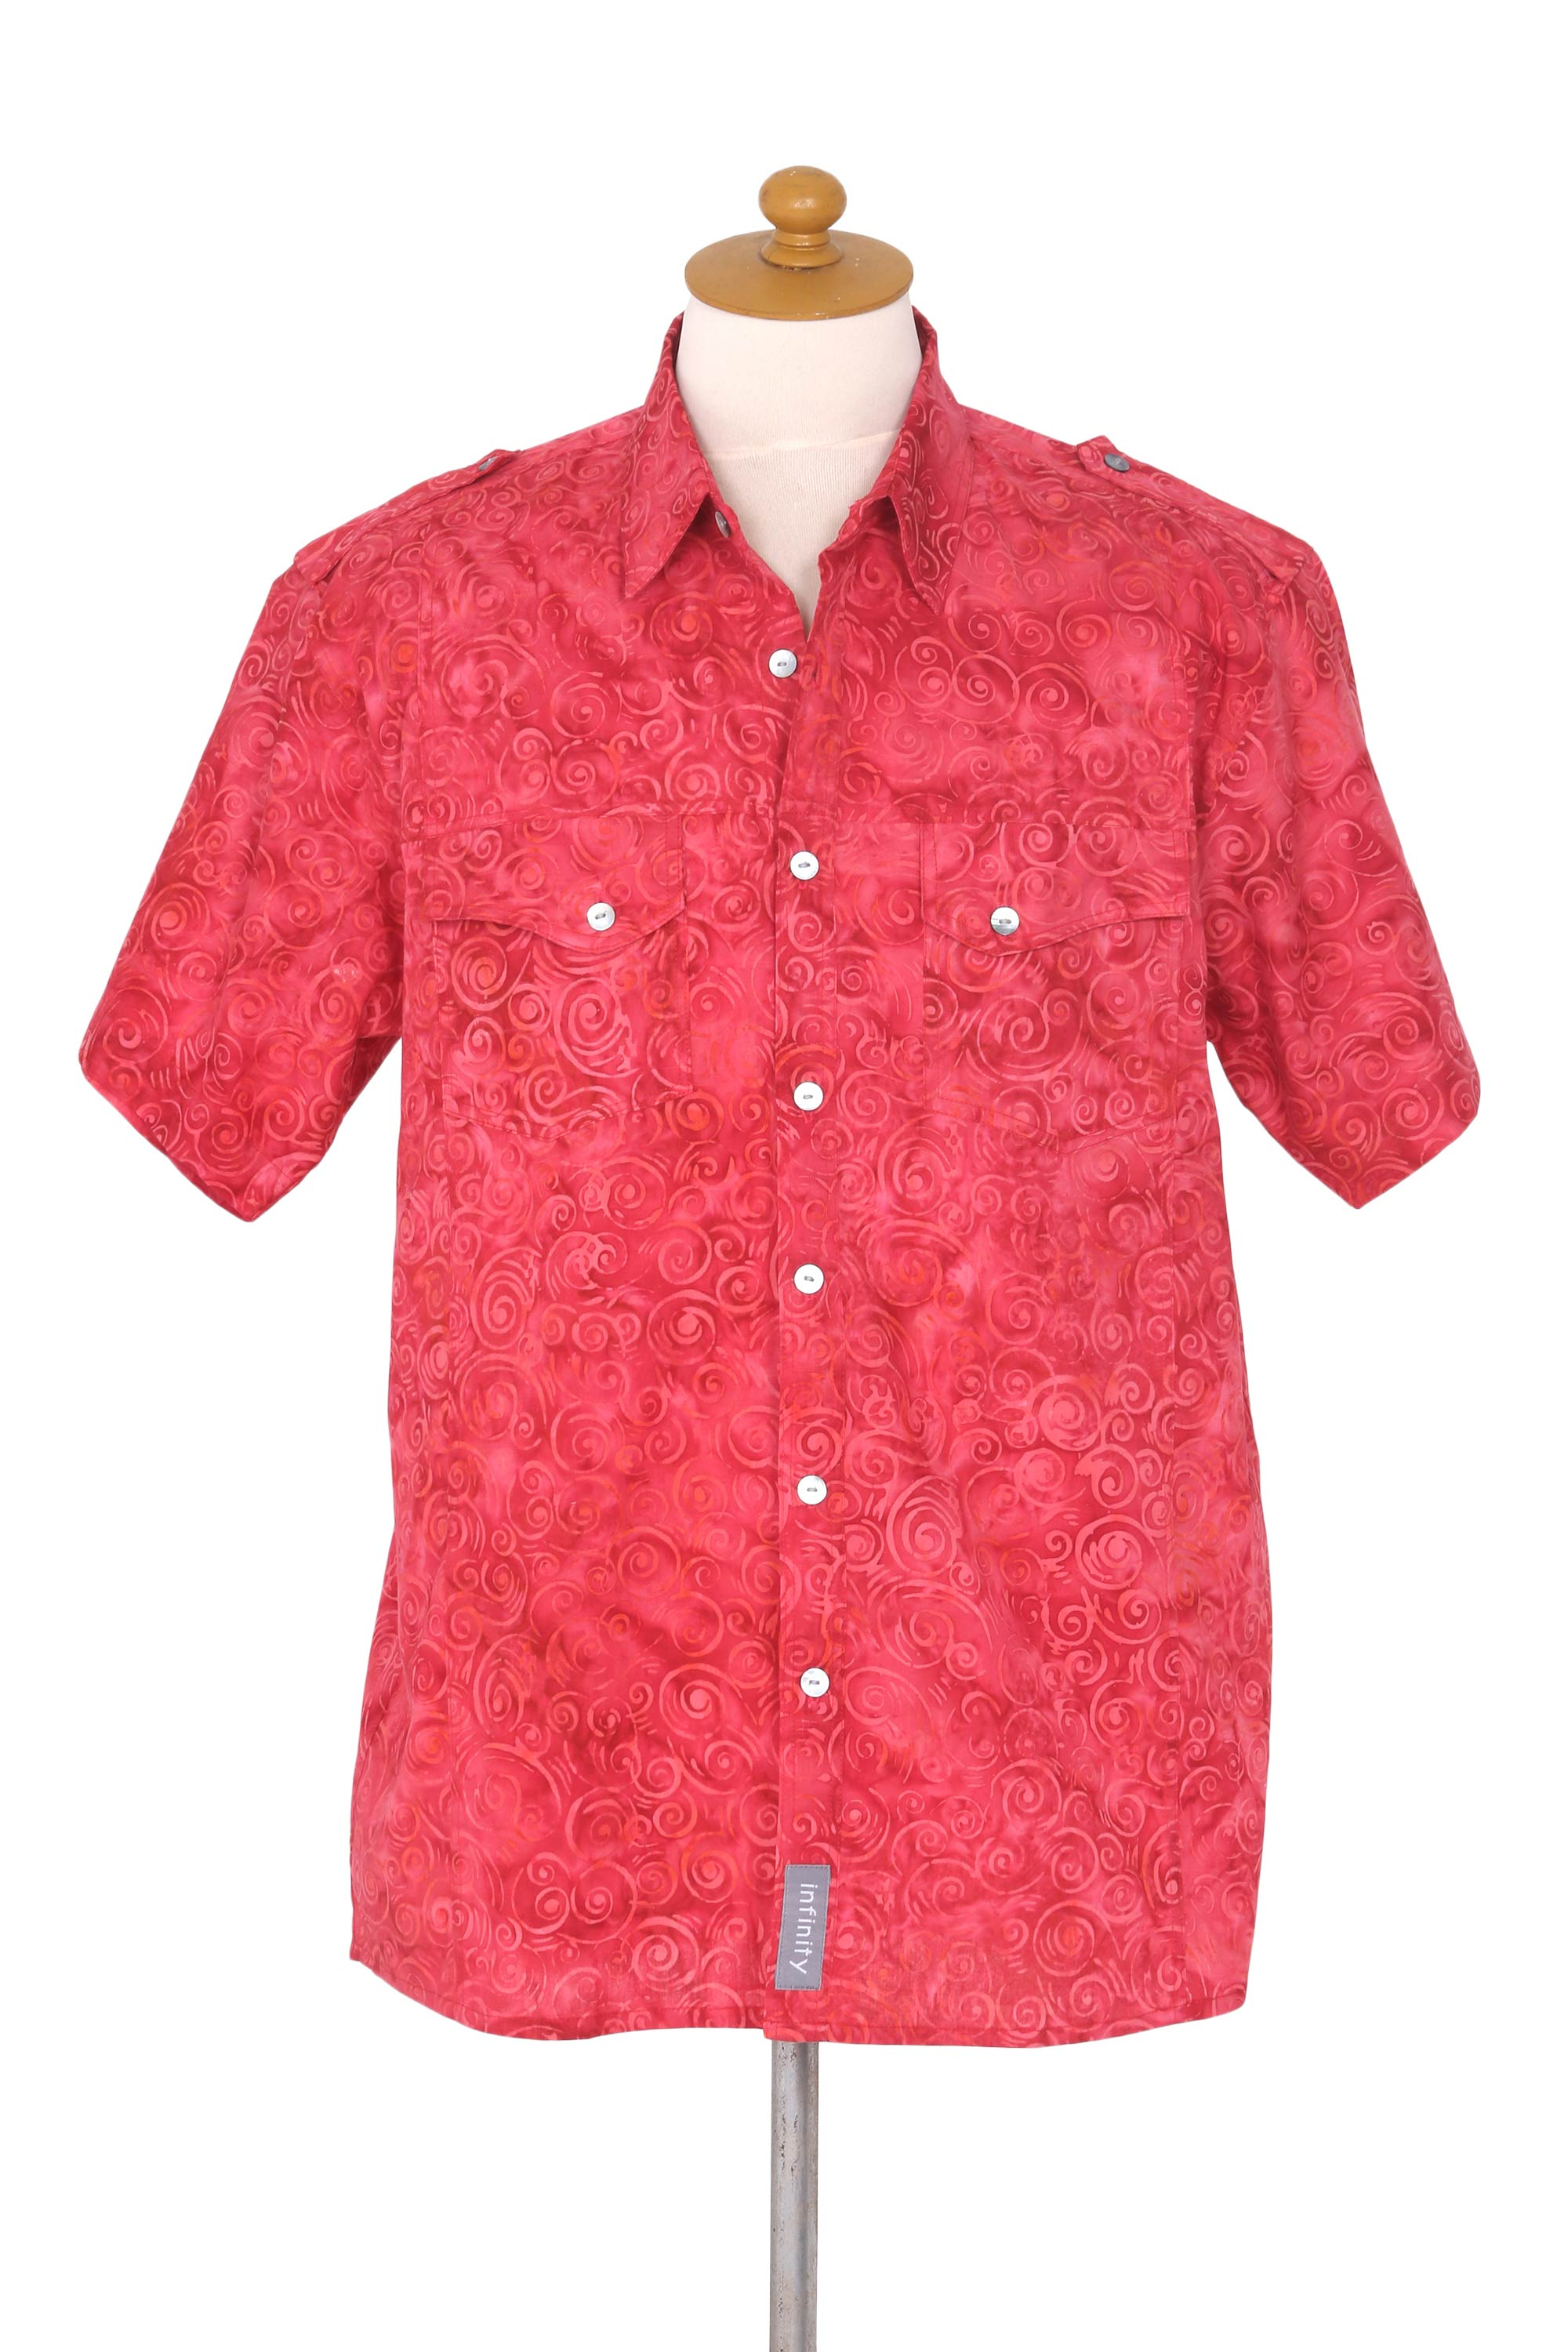 UNICEF Market | Red Cotton Batik Short Sleeve Men's Shirt - Red Bali ...